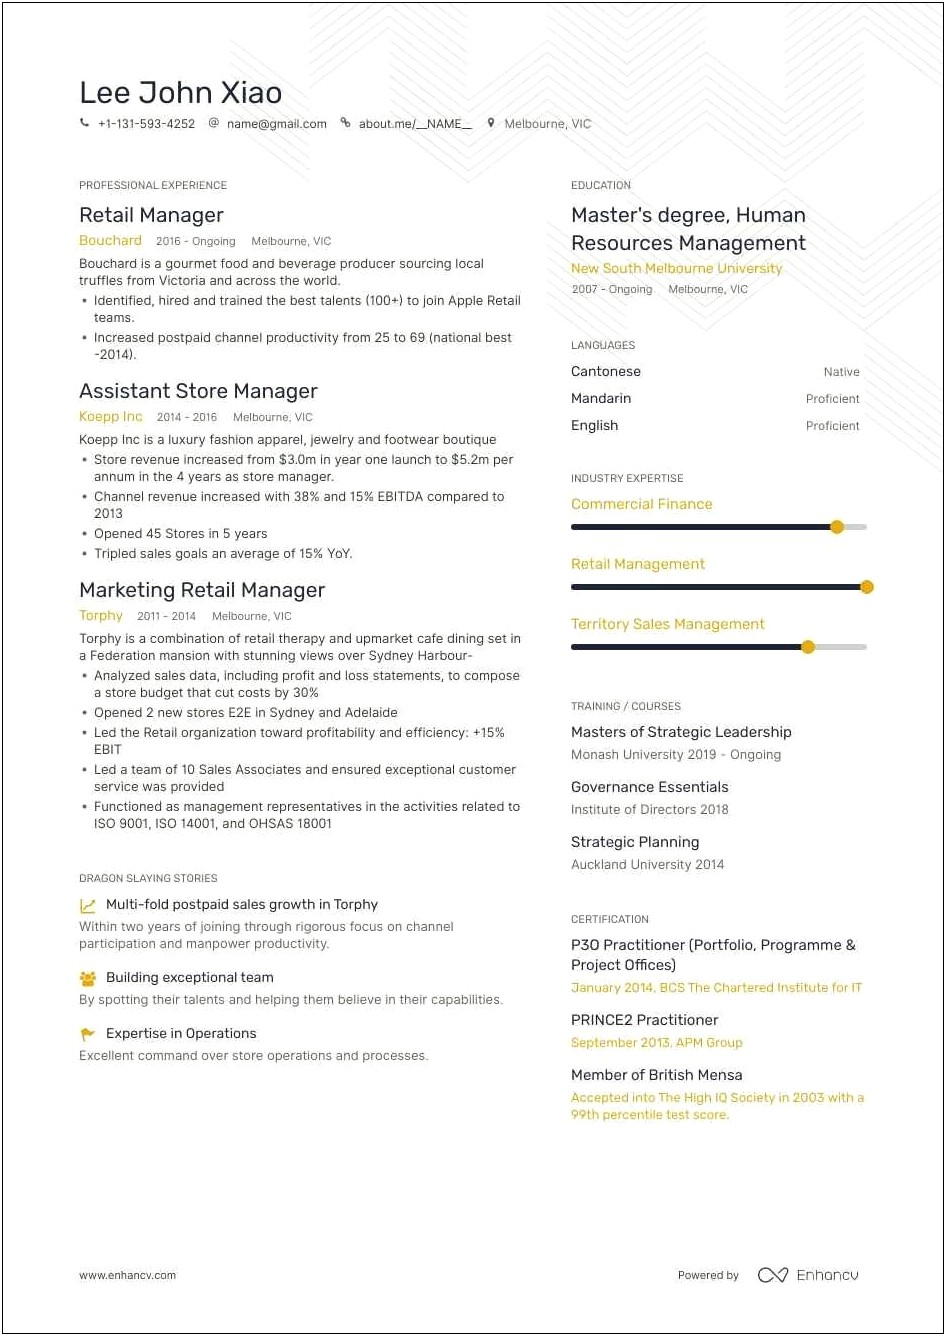 Assistant Manager Description For Resume